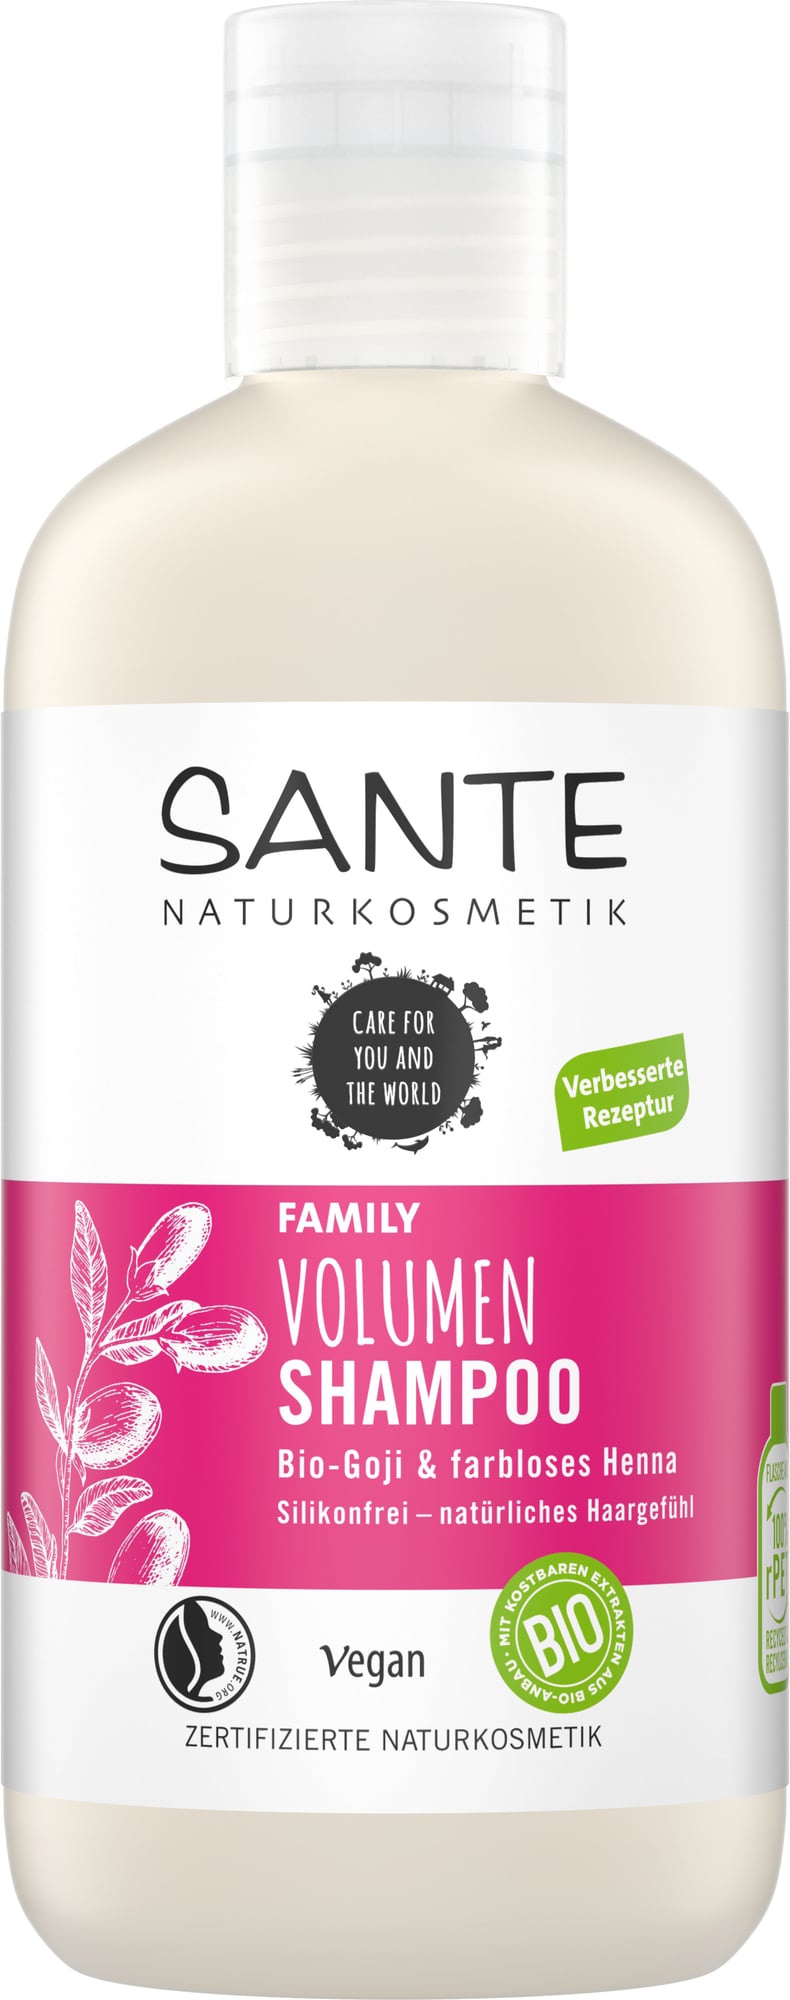 Sante Naturkosmetik Family Volumen Shampoo